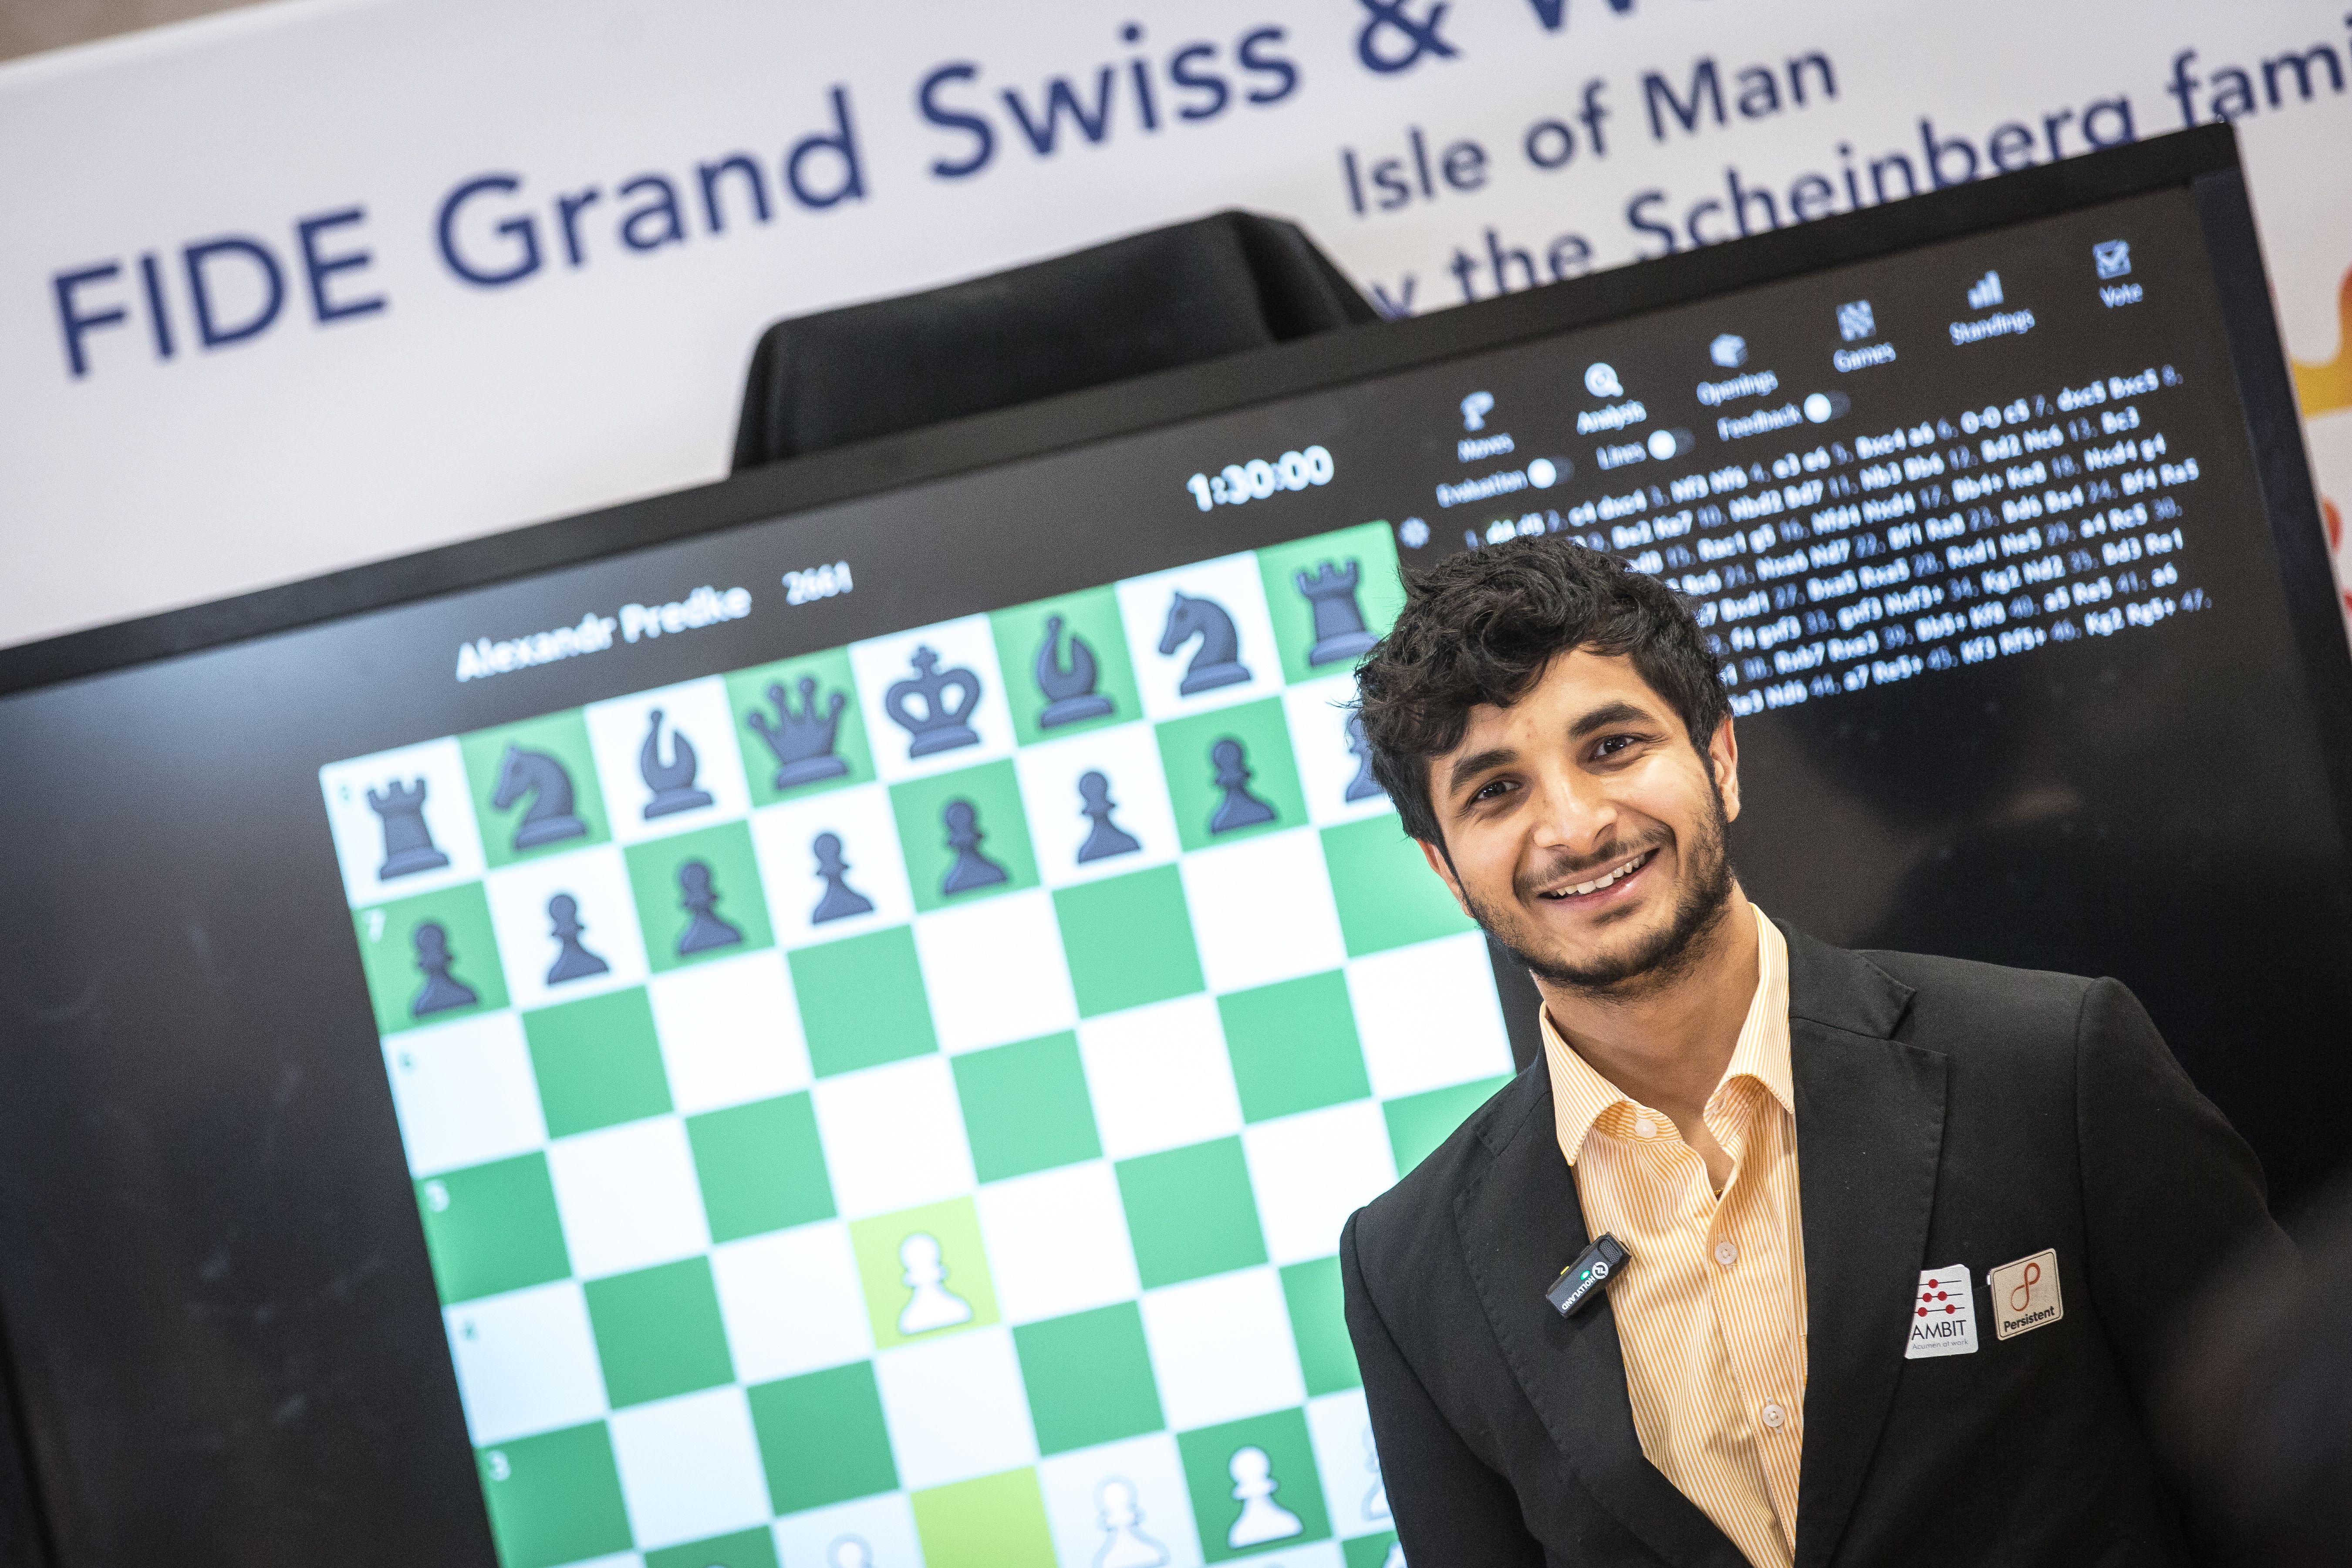 FIDE Grand Swiss Round 9: Nakamura, Maghsoodloo Join Leaders 